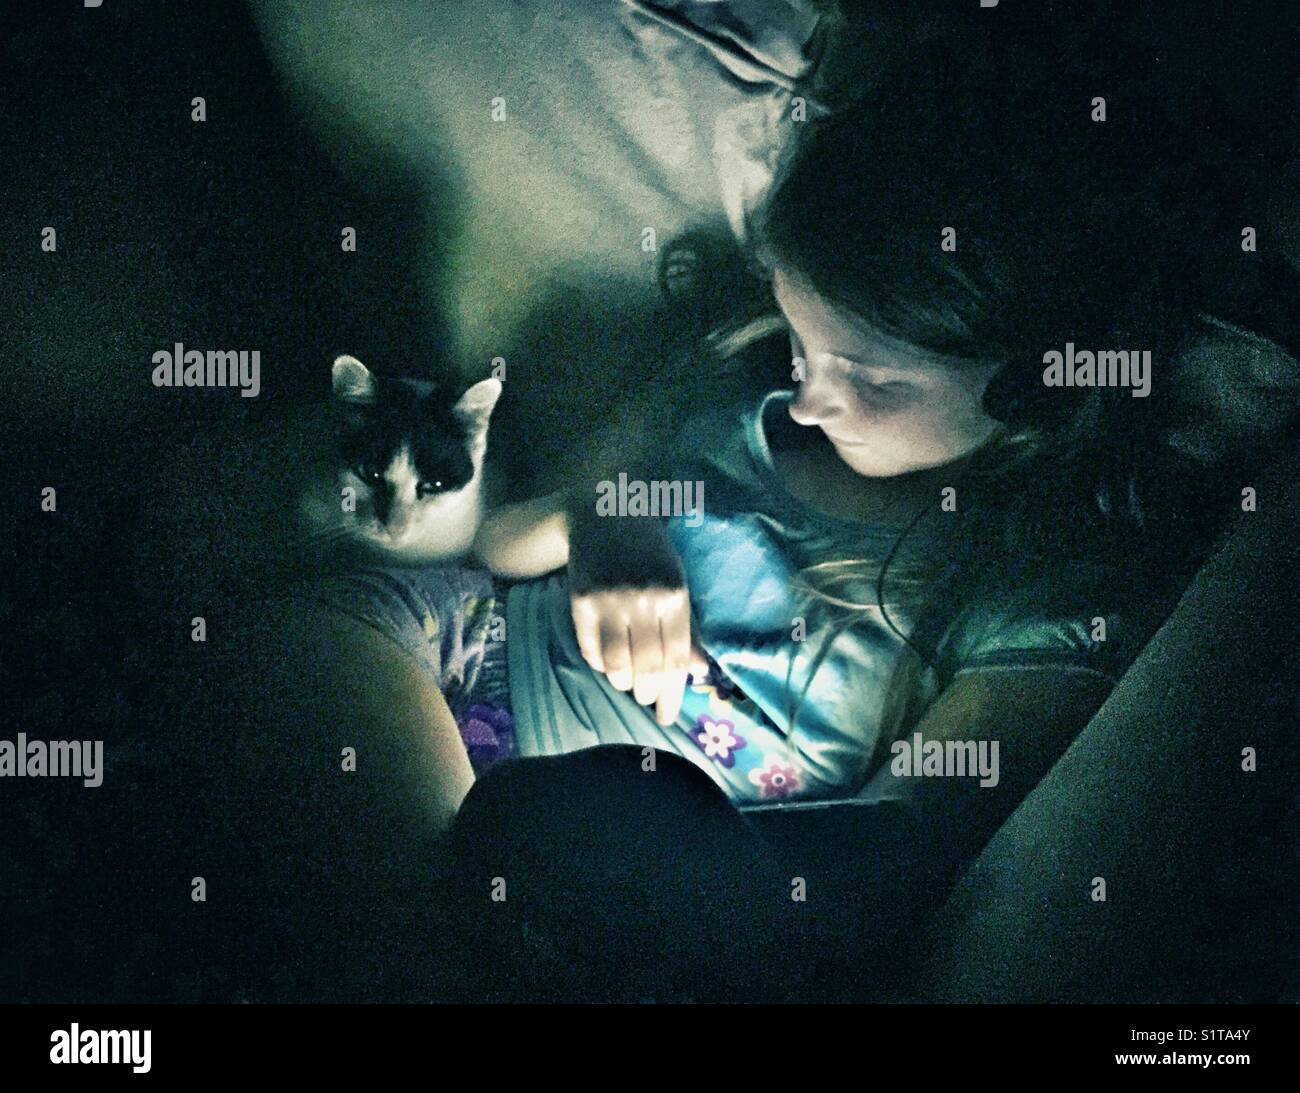 Ragazza utilizzando tablet al buio con pet cat rilassante accanto a lei Foto Stock